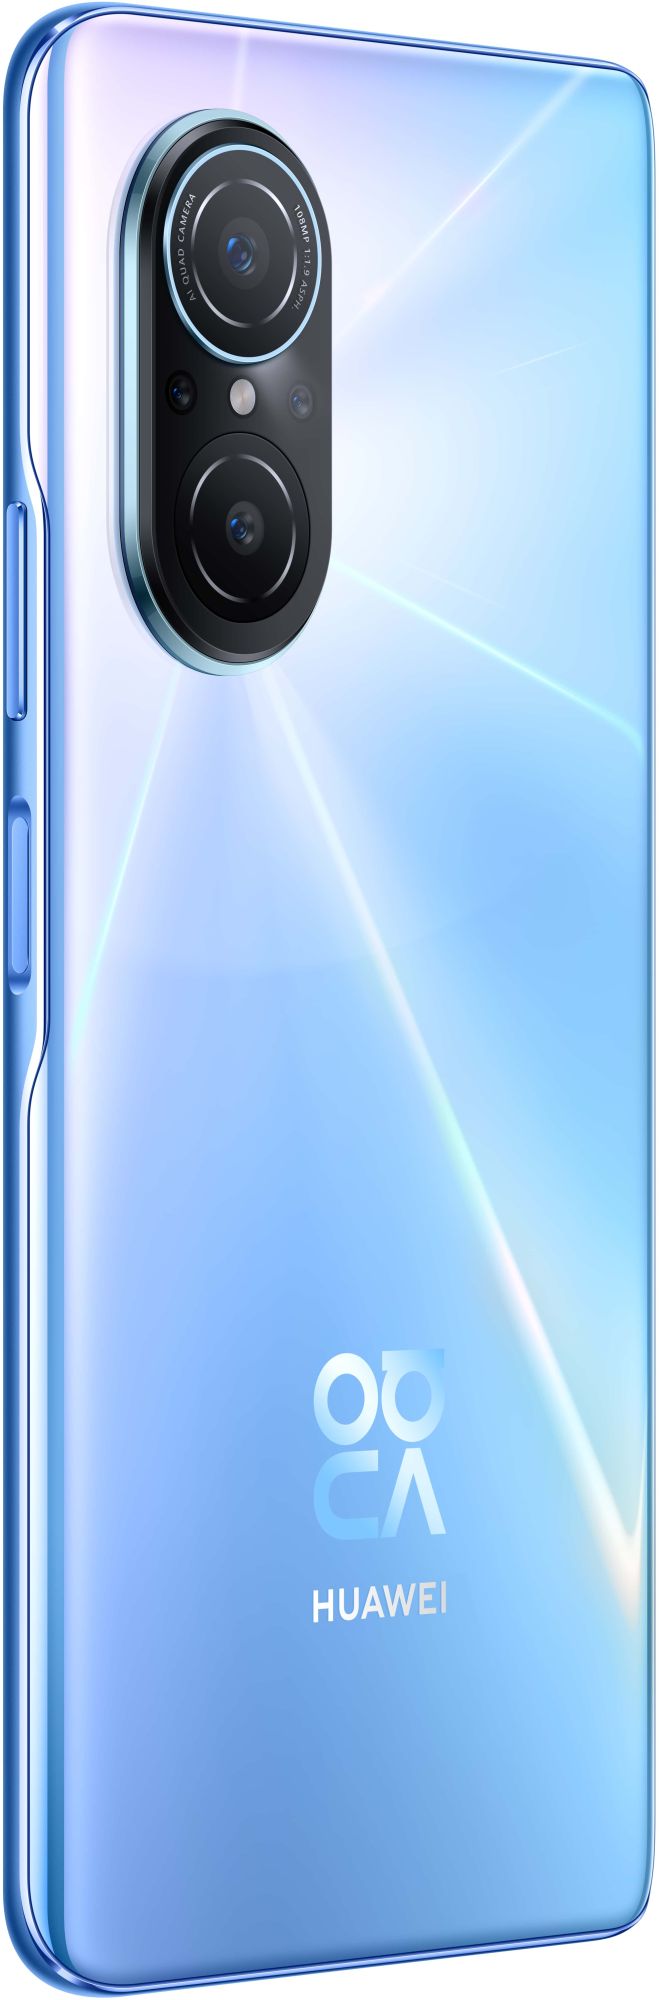 HUAWEI Nova 9 SE 128GB Breathing Crystal